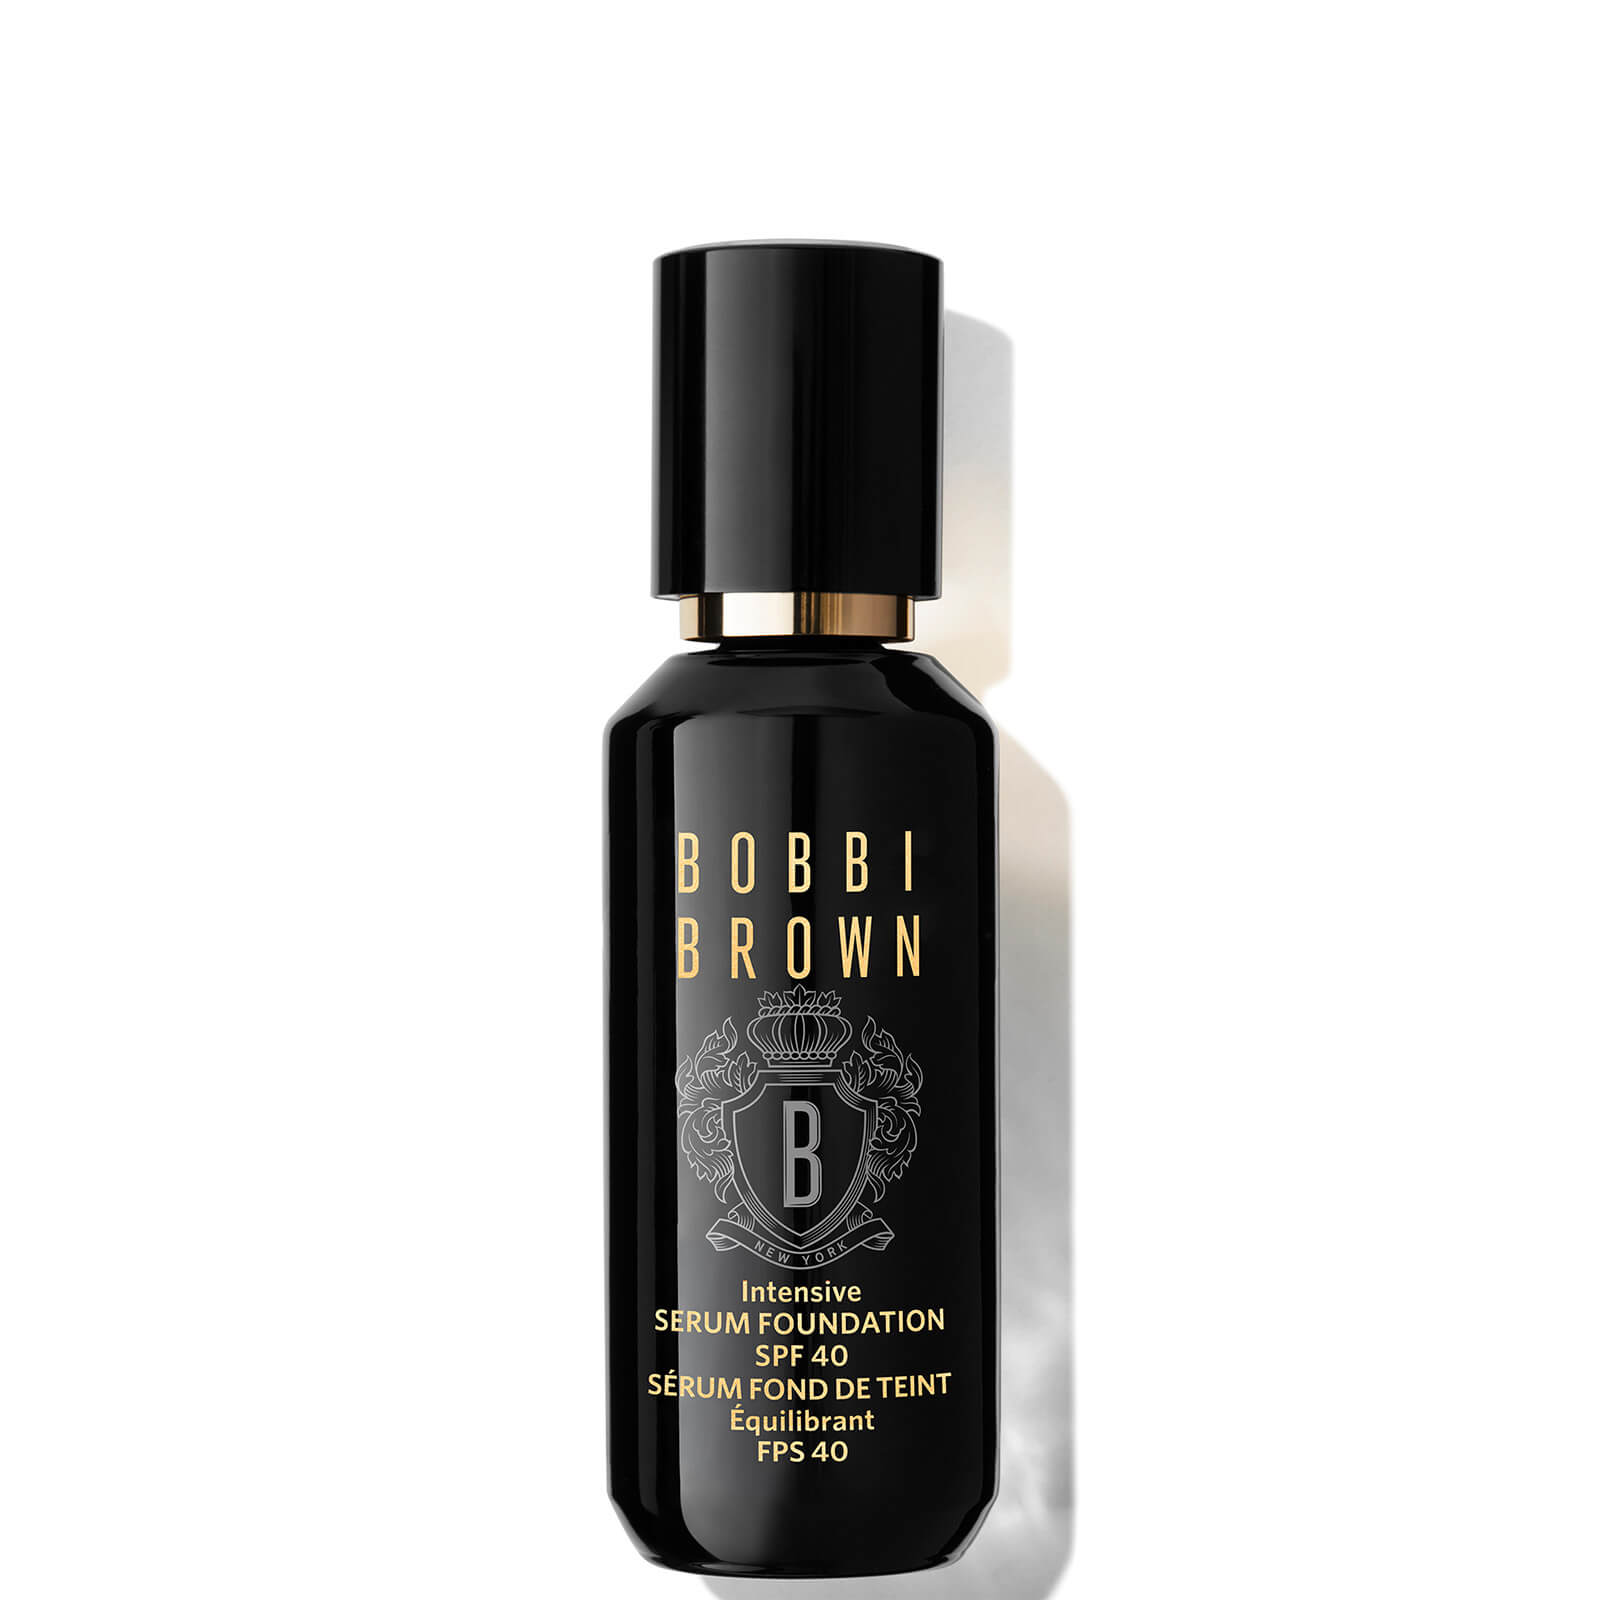 Bobbi Brown Intensive Serum Foundation SPF40 30ml (Various Shades) - Warm Natural